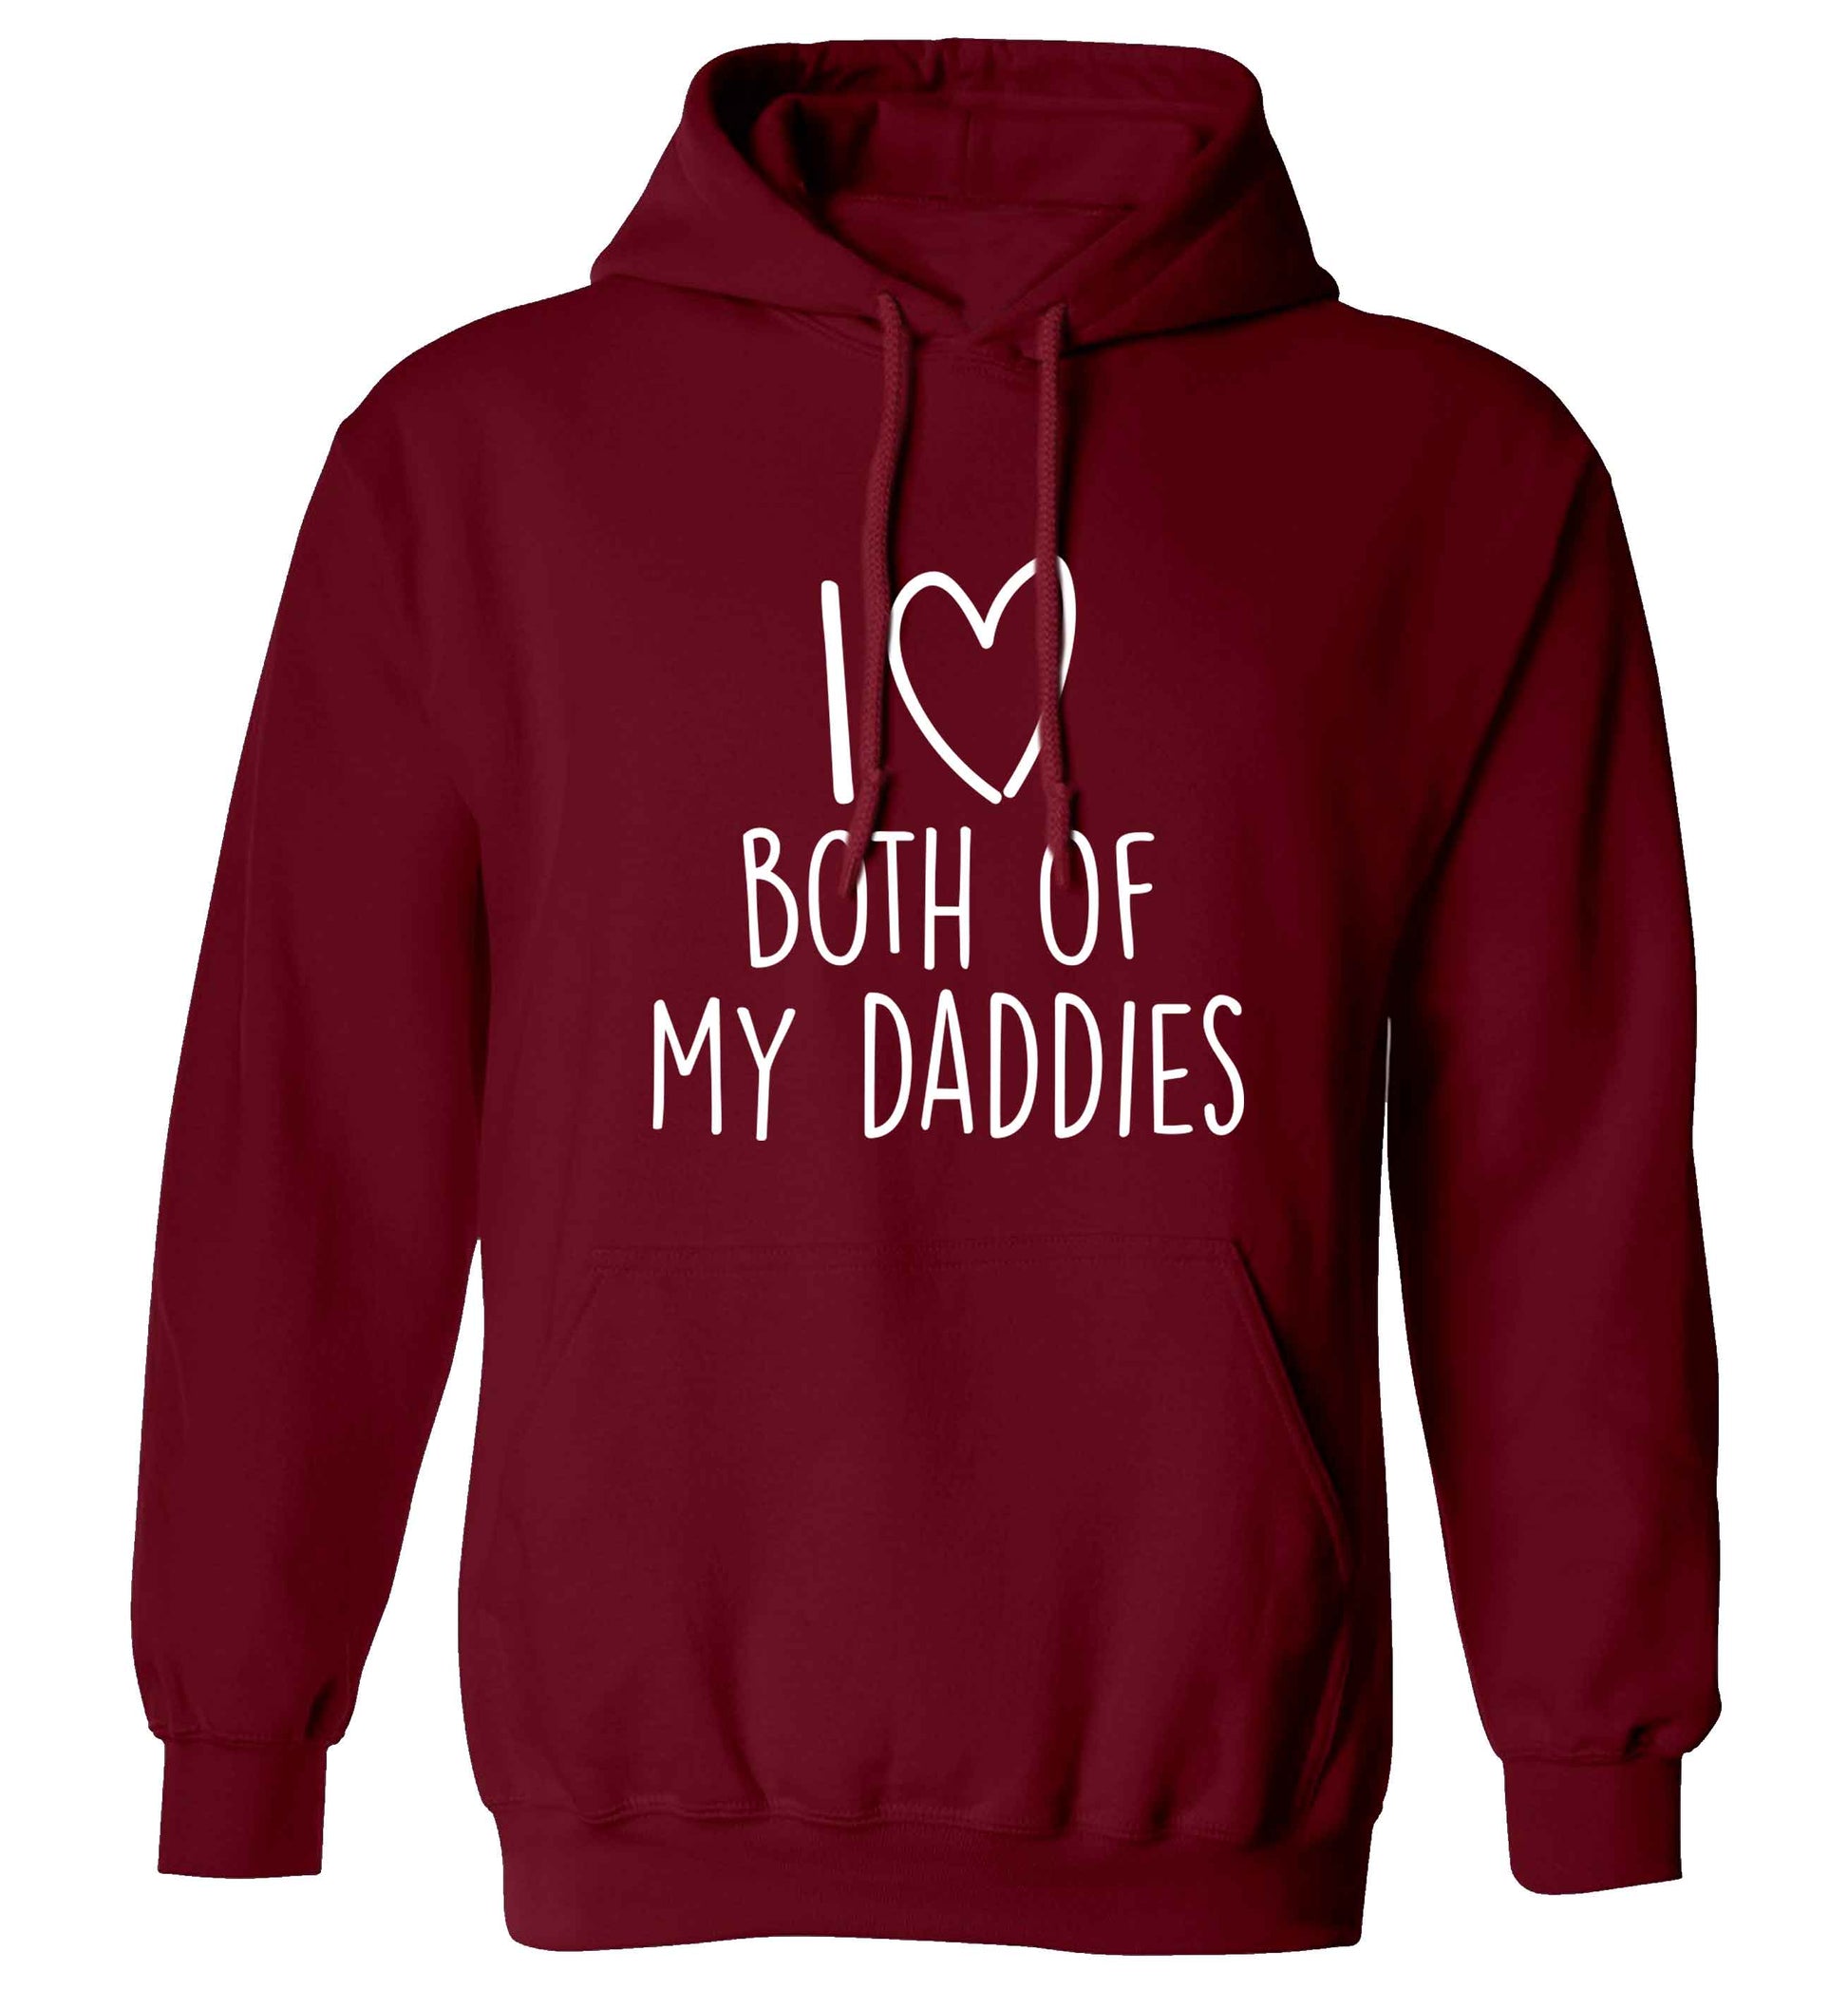 I love both of my daddies adults unisex maroon hoodie 2XL